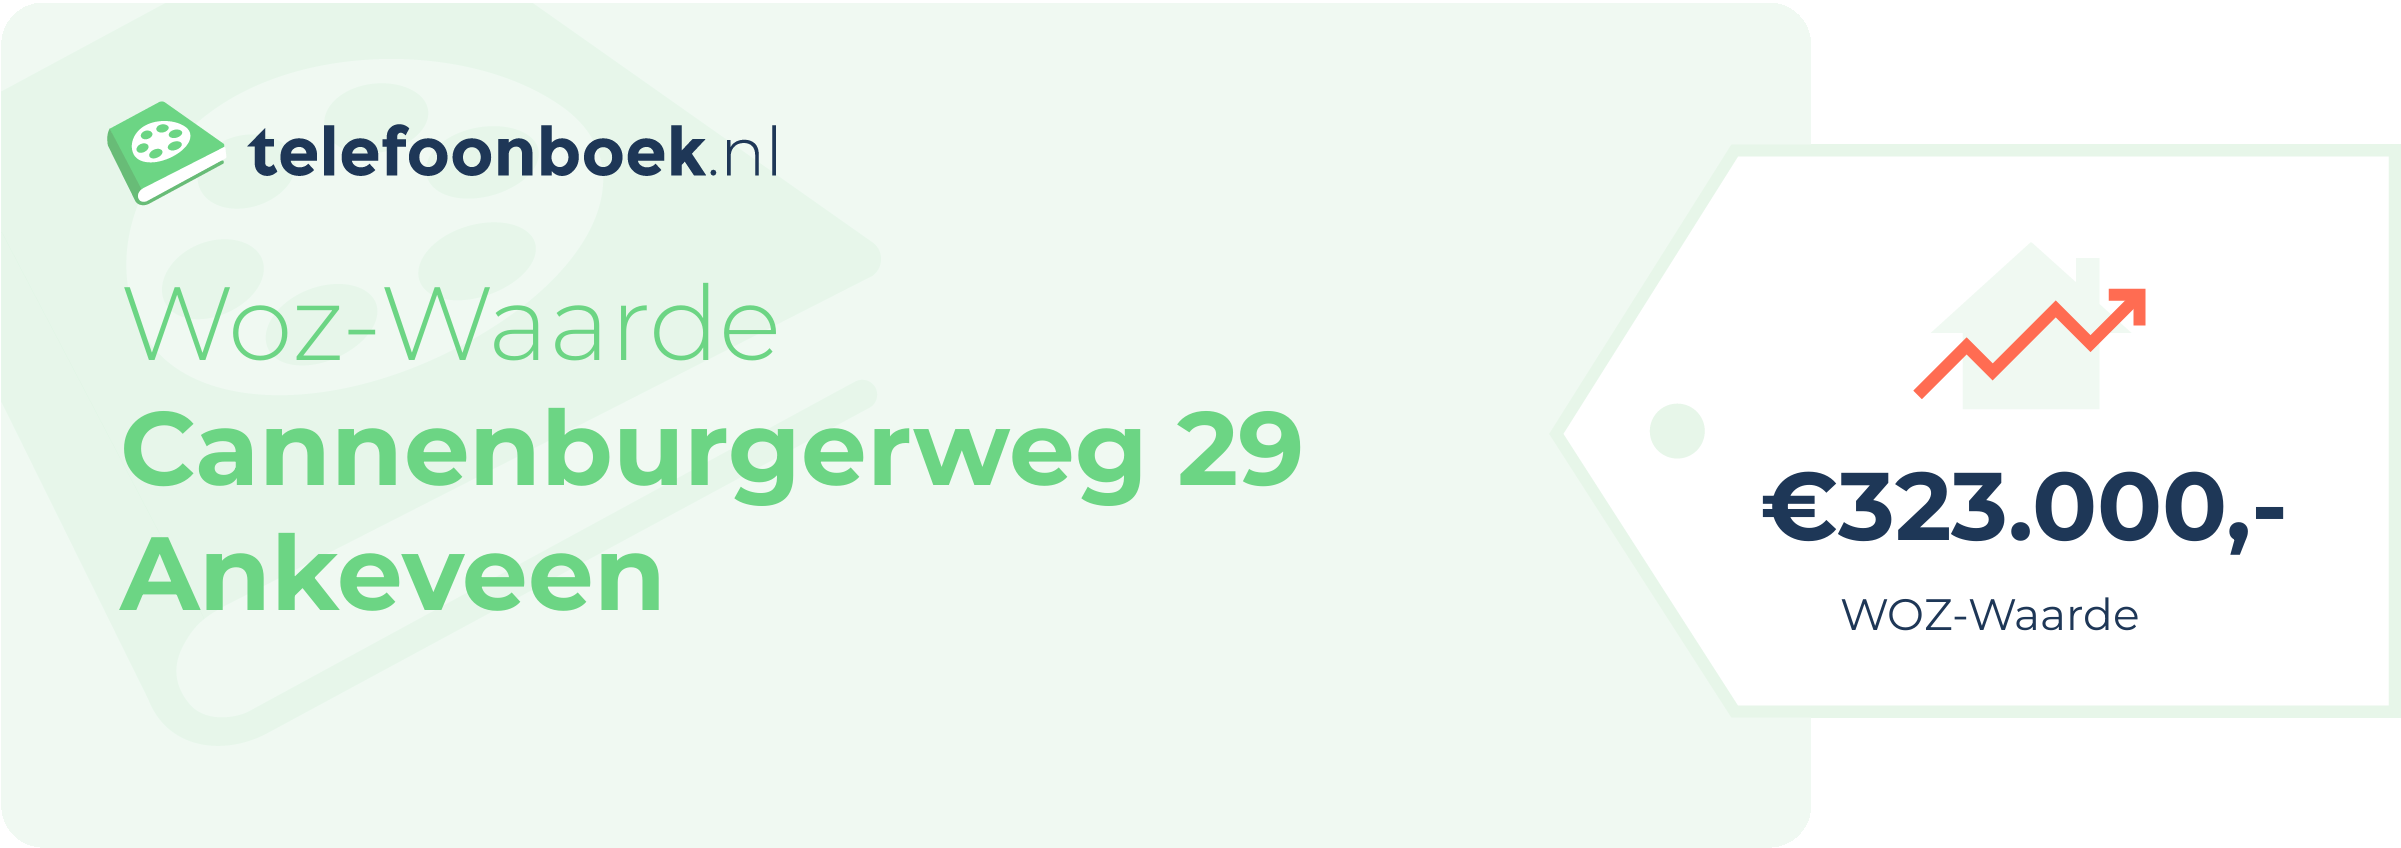 WOZ-waarde Cannenburgerweg 29 Ankeveen